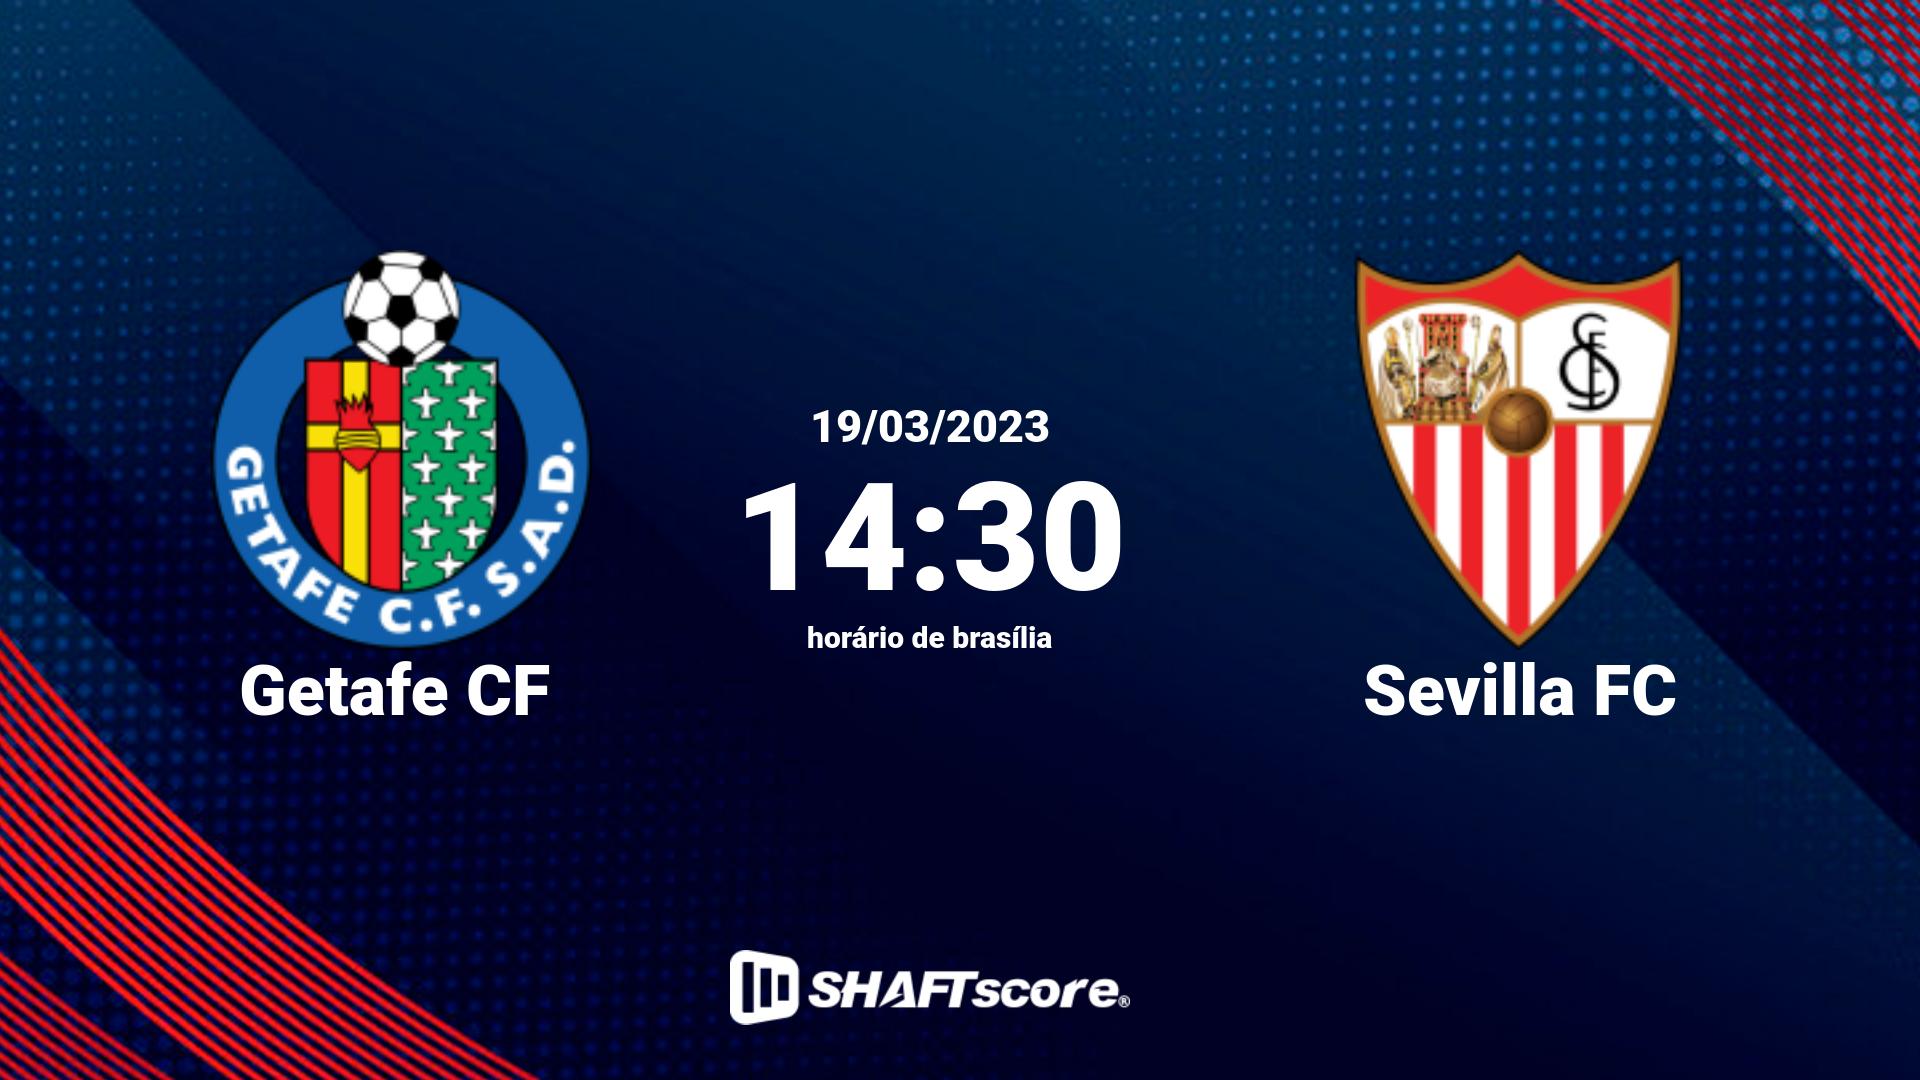 Estatísticas do jogo Getafe CF vs Sevilla FC 19.03 14:30